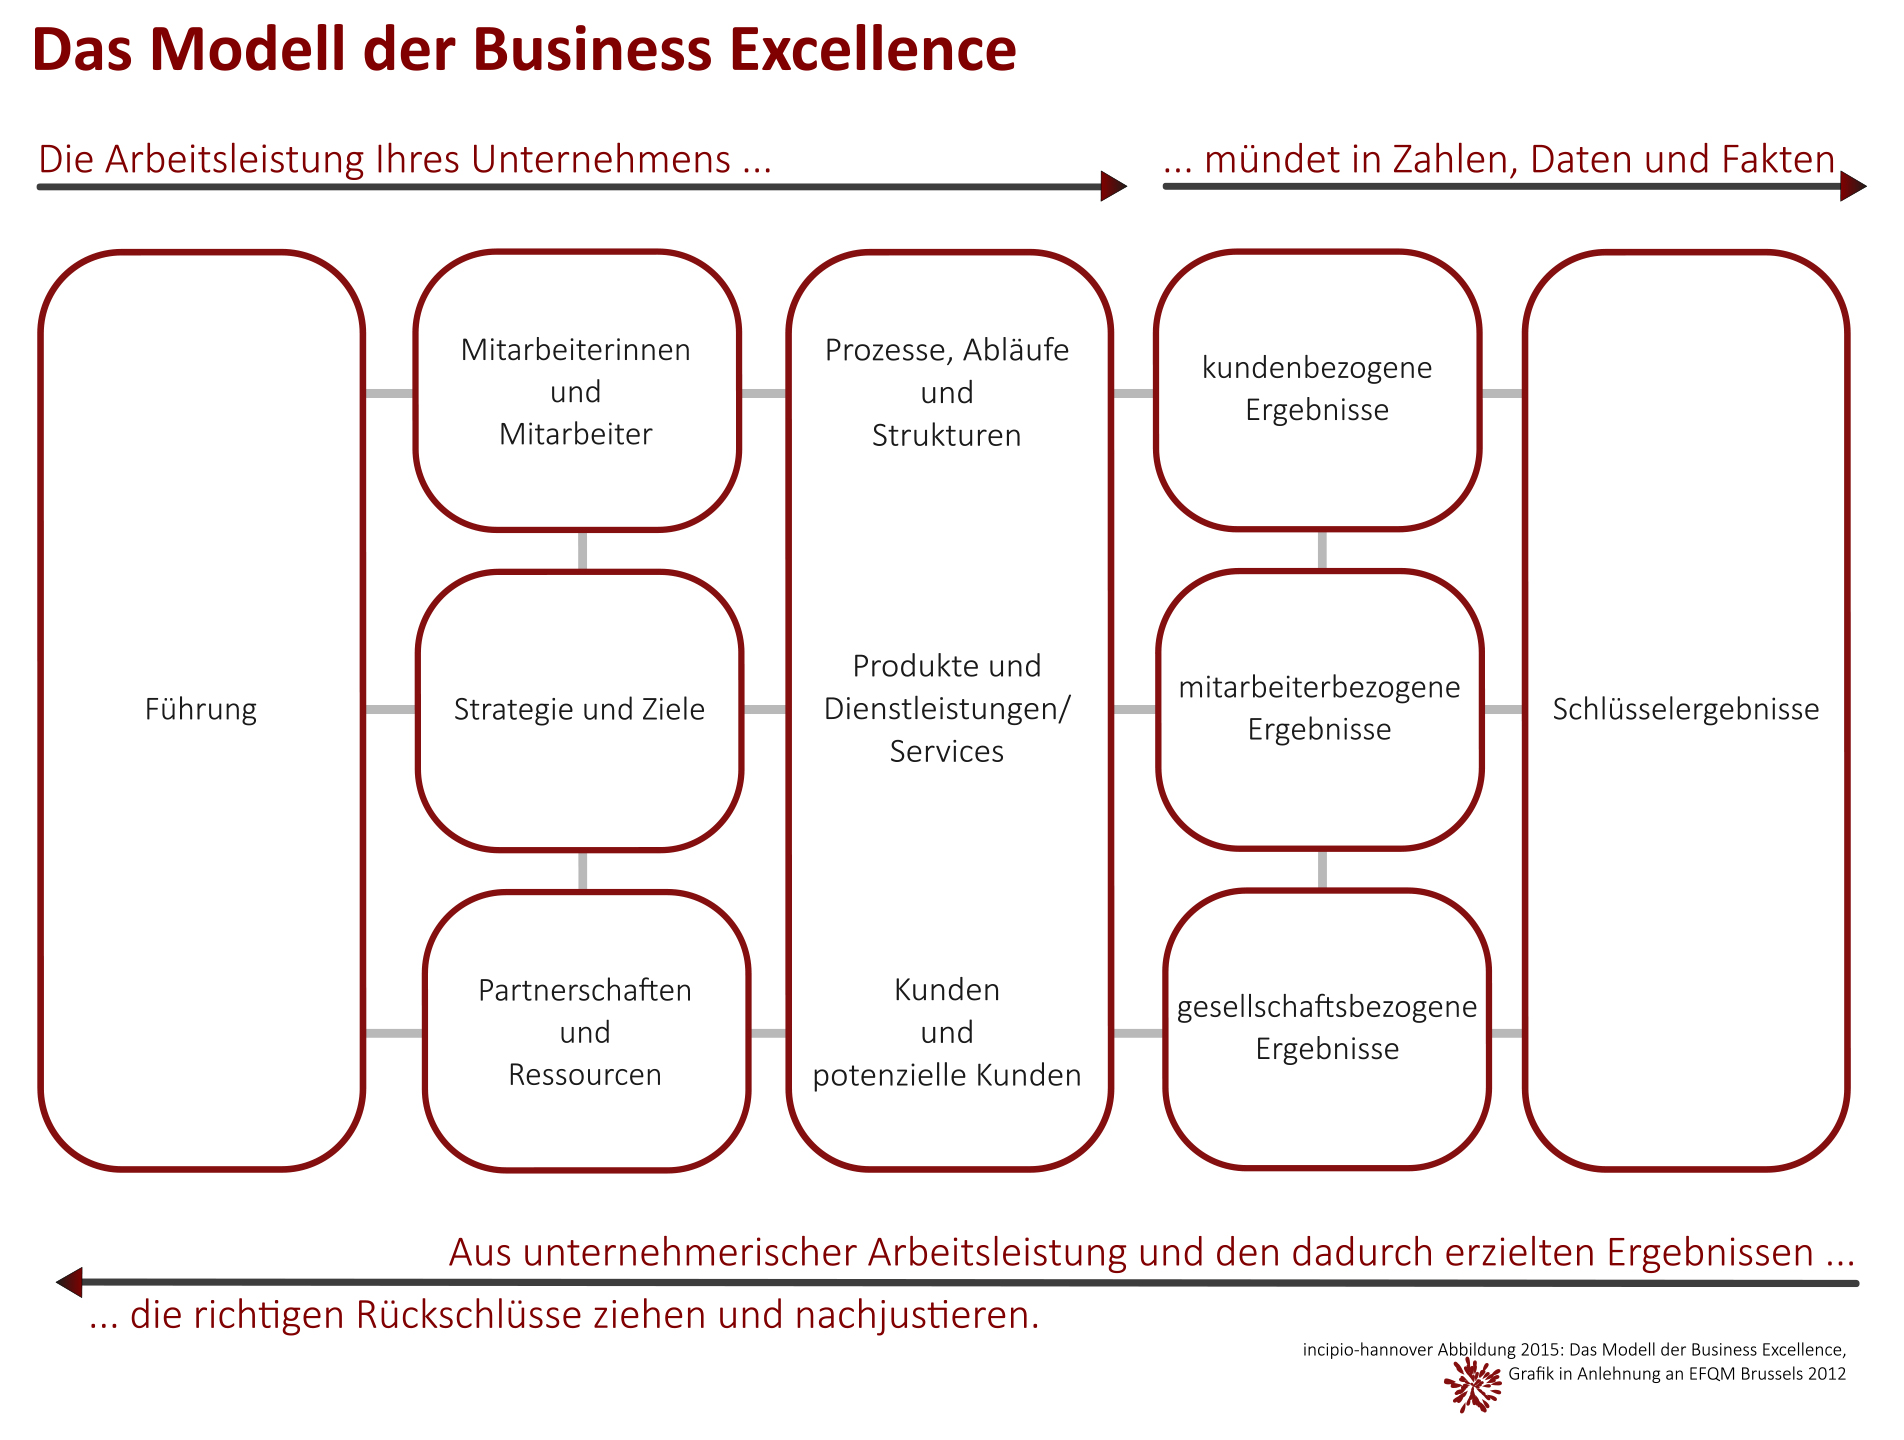 Das Modell der Business Excellence